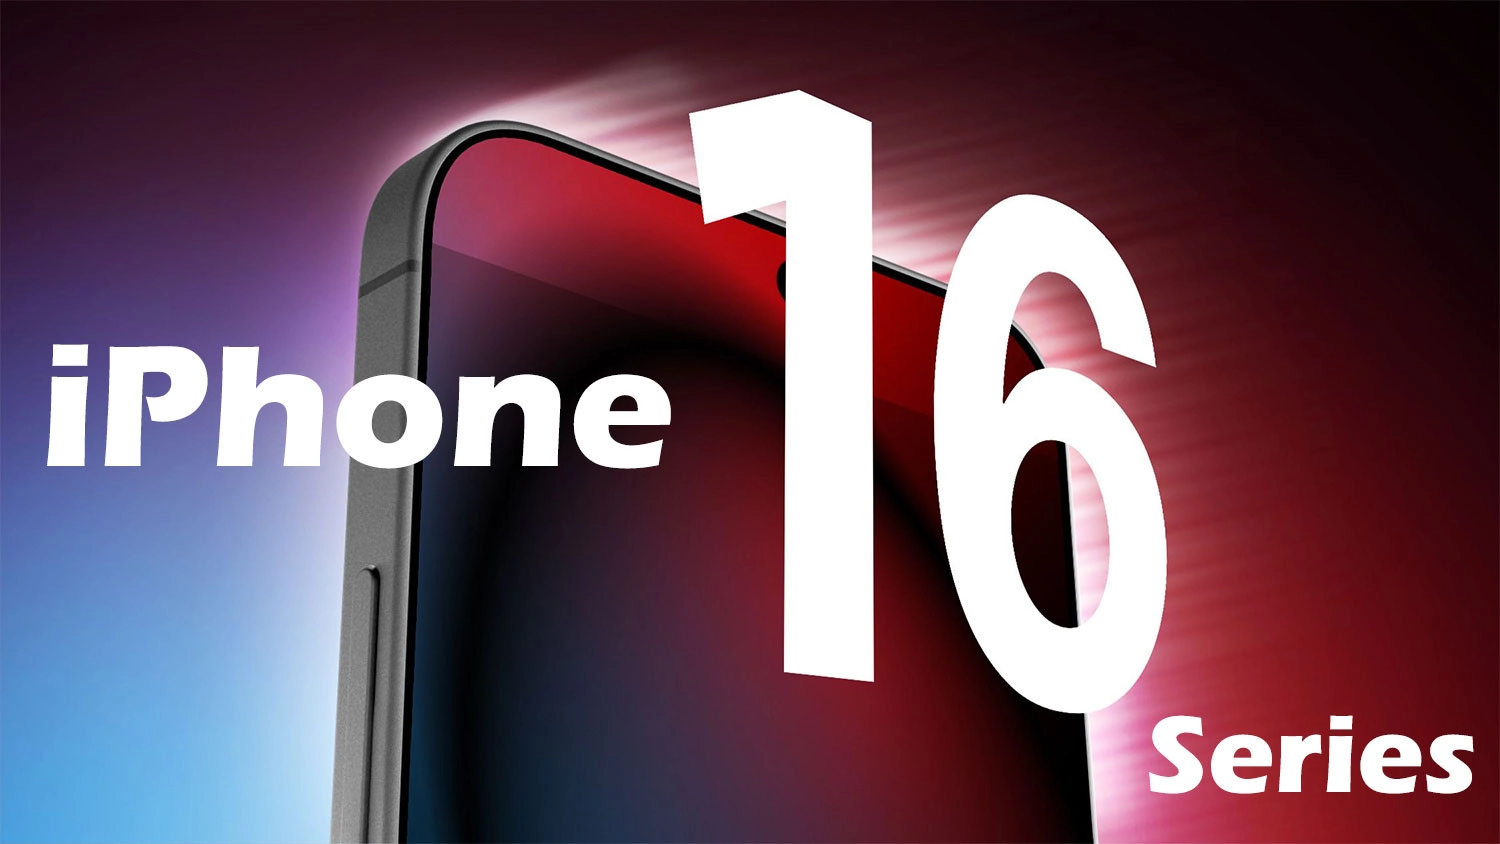 iphone-16-series-co-gia-tang-cao-1